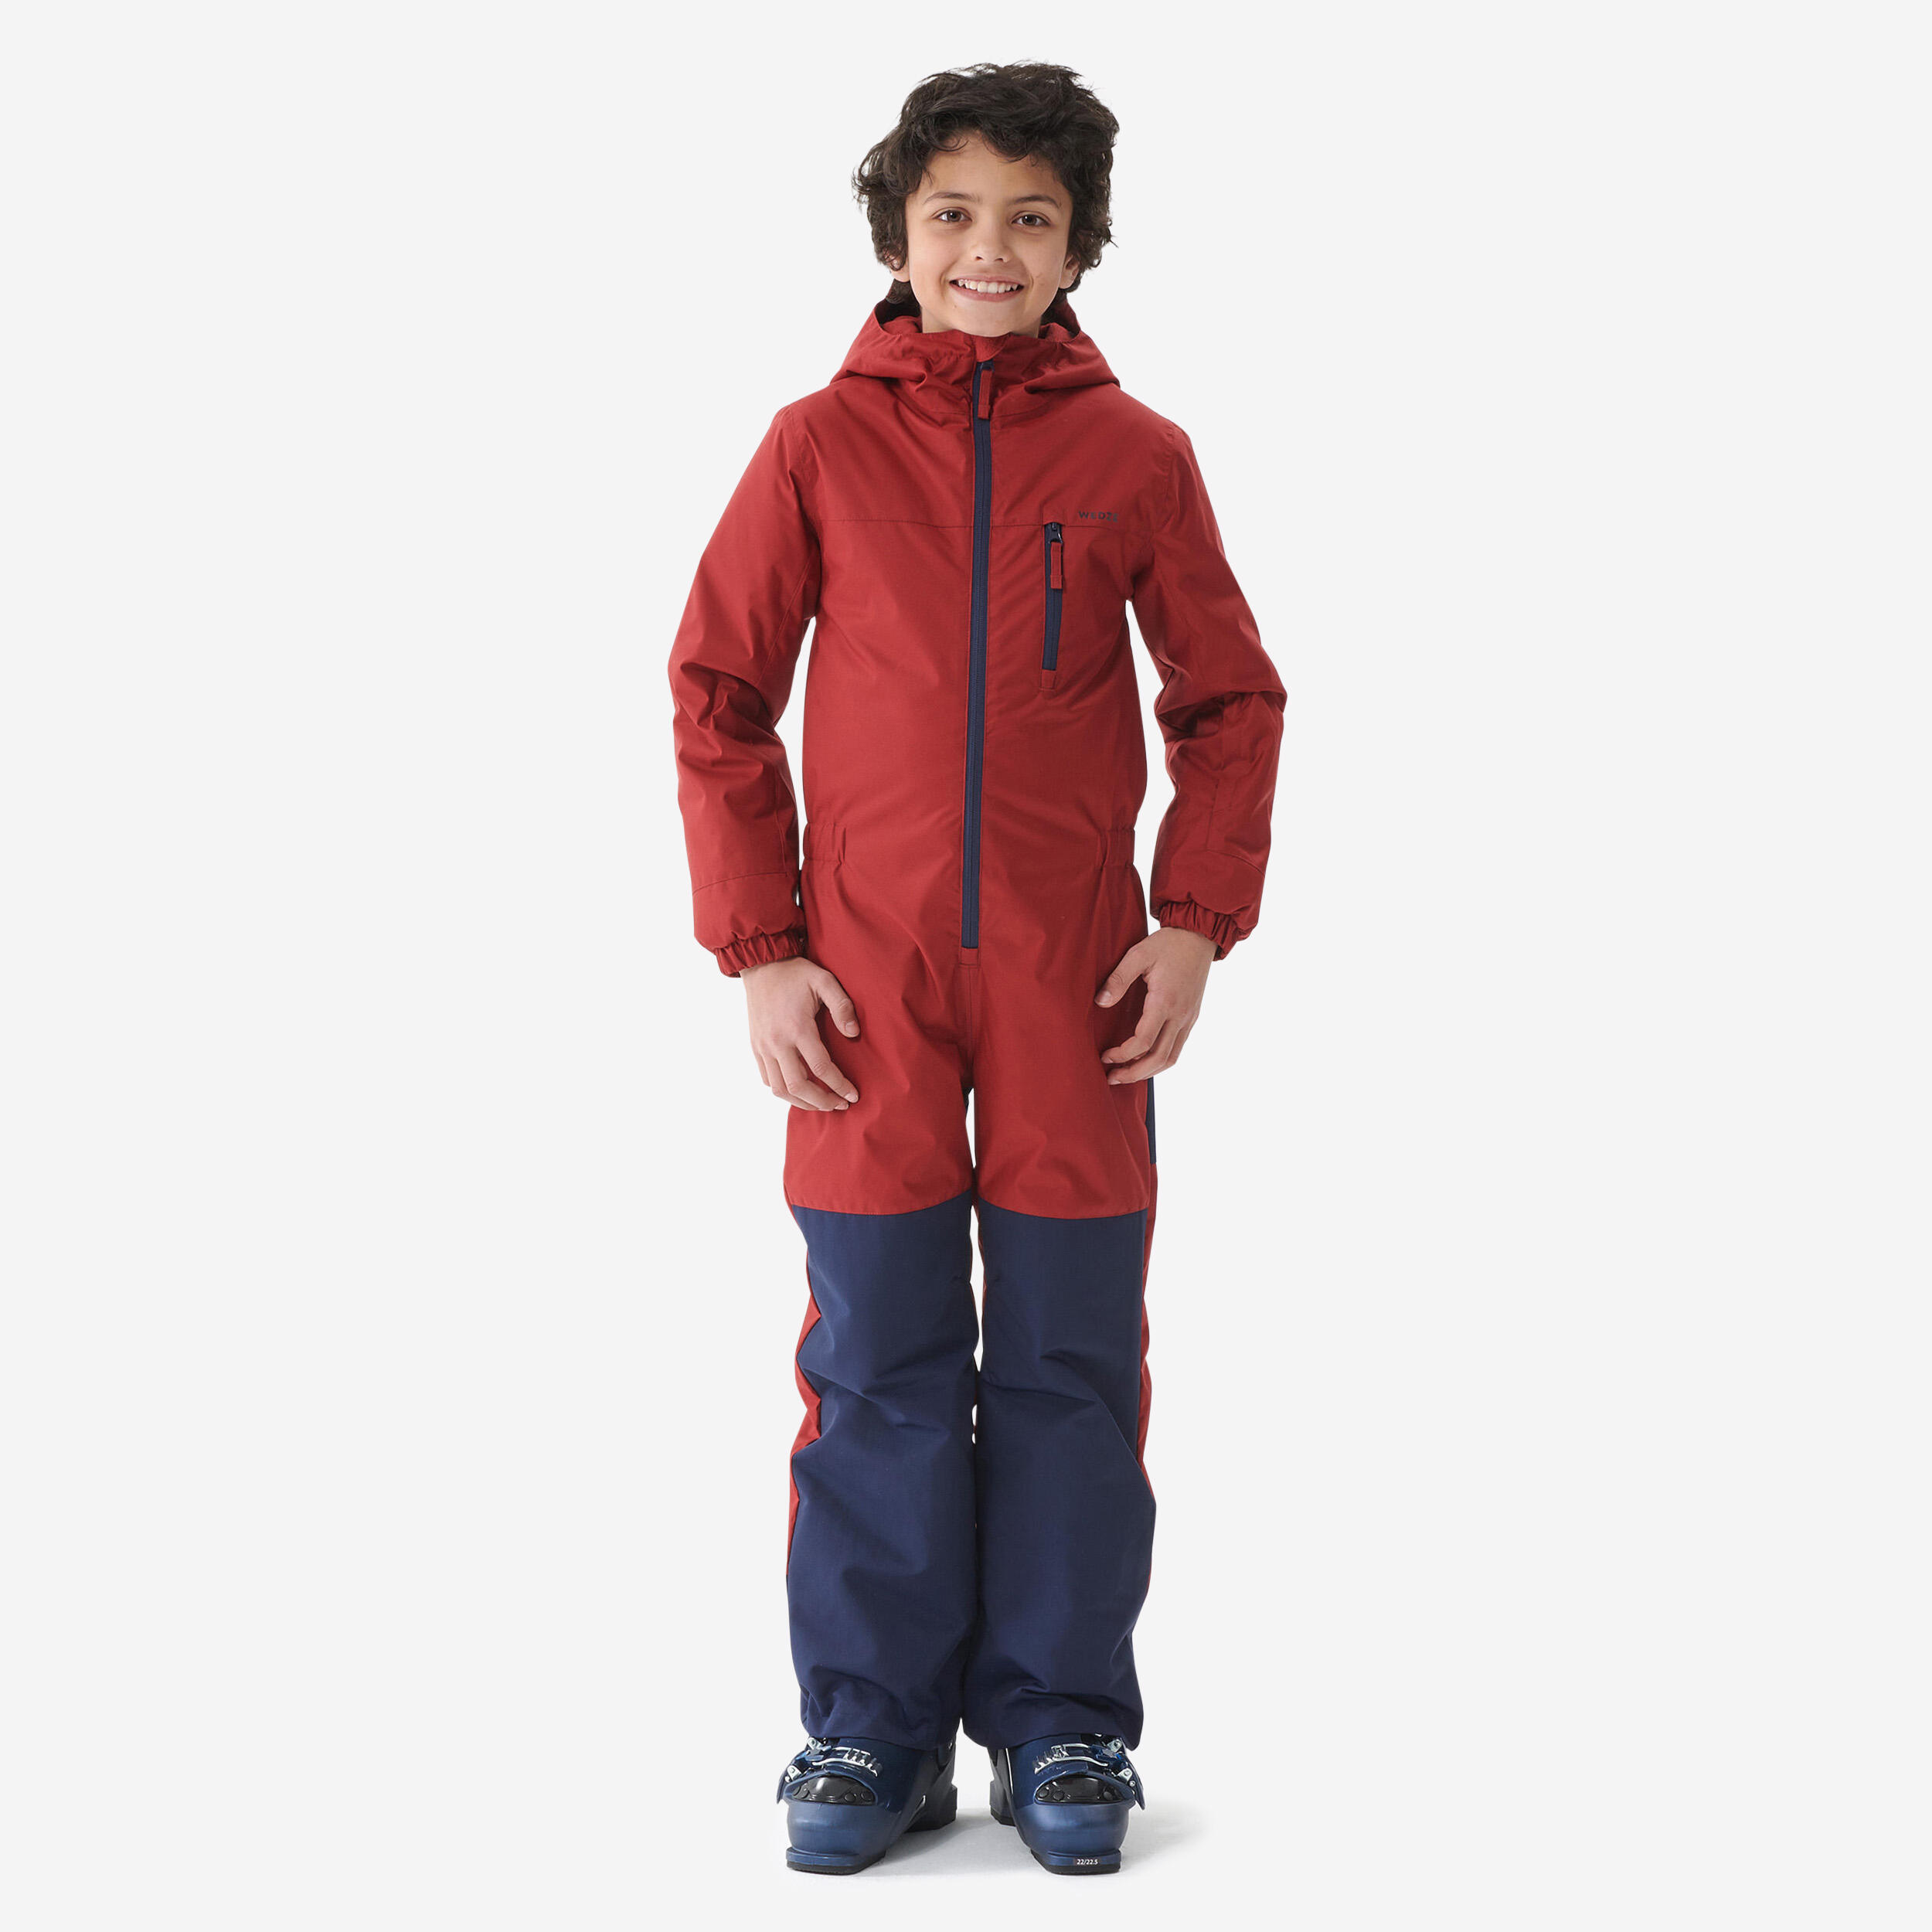 Kids' Ski Suit - Maroon/Navy 1/6